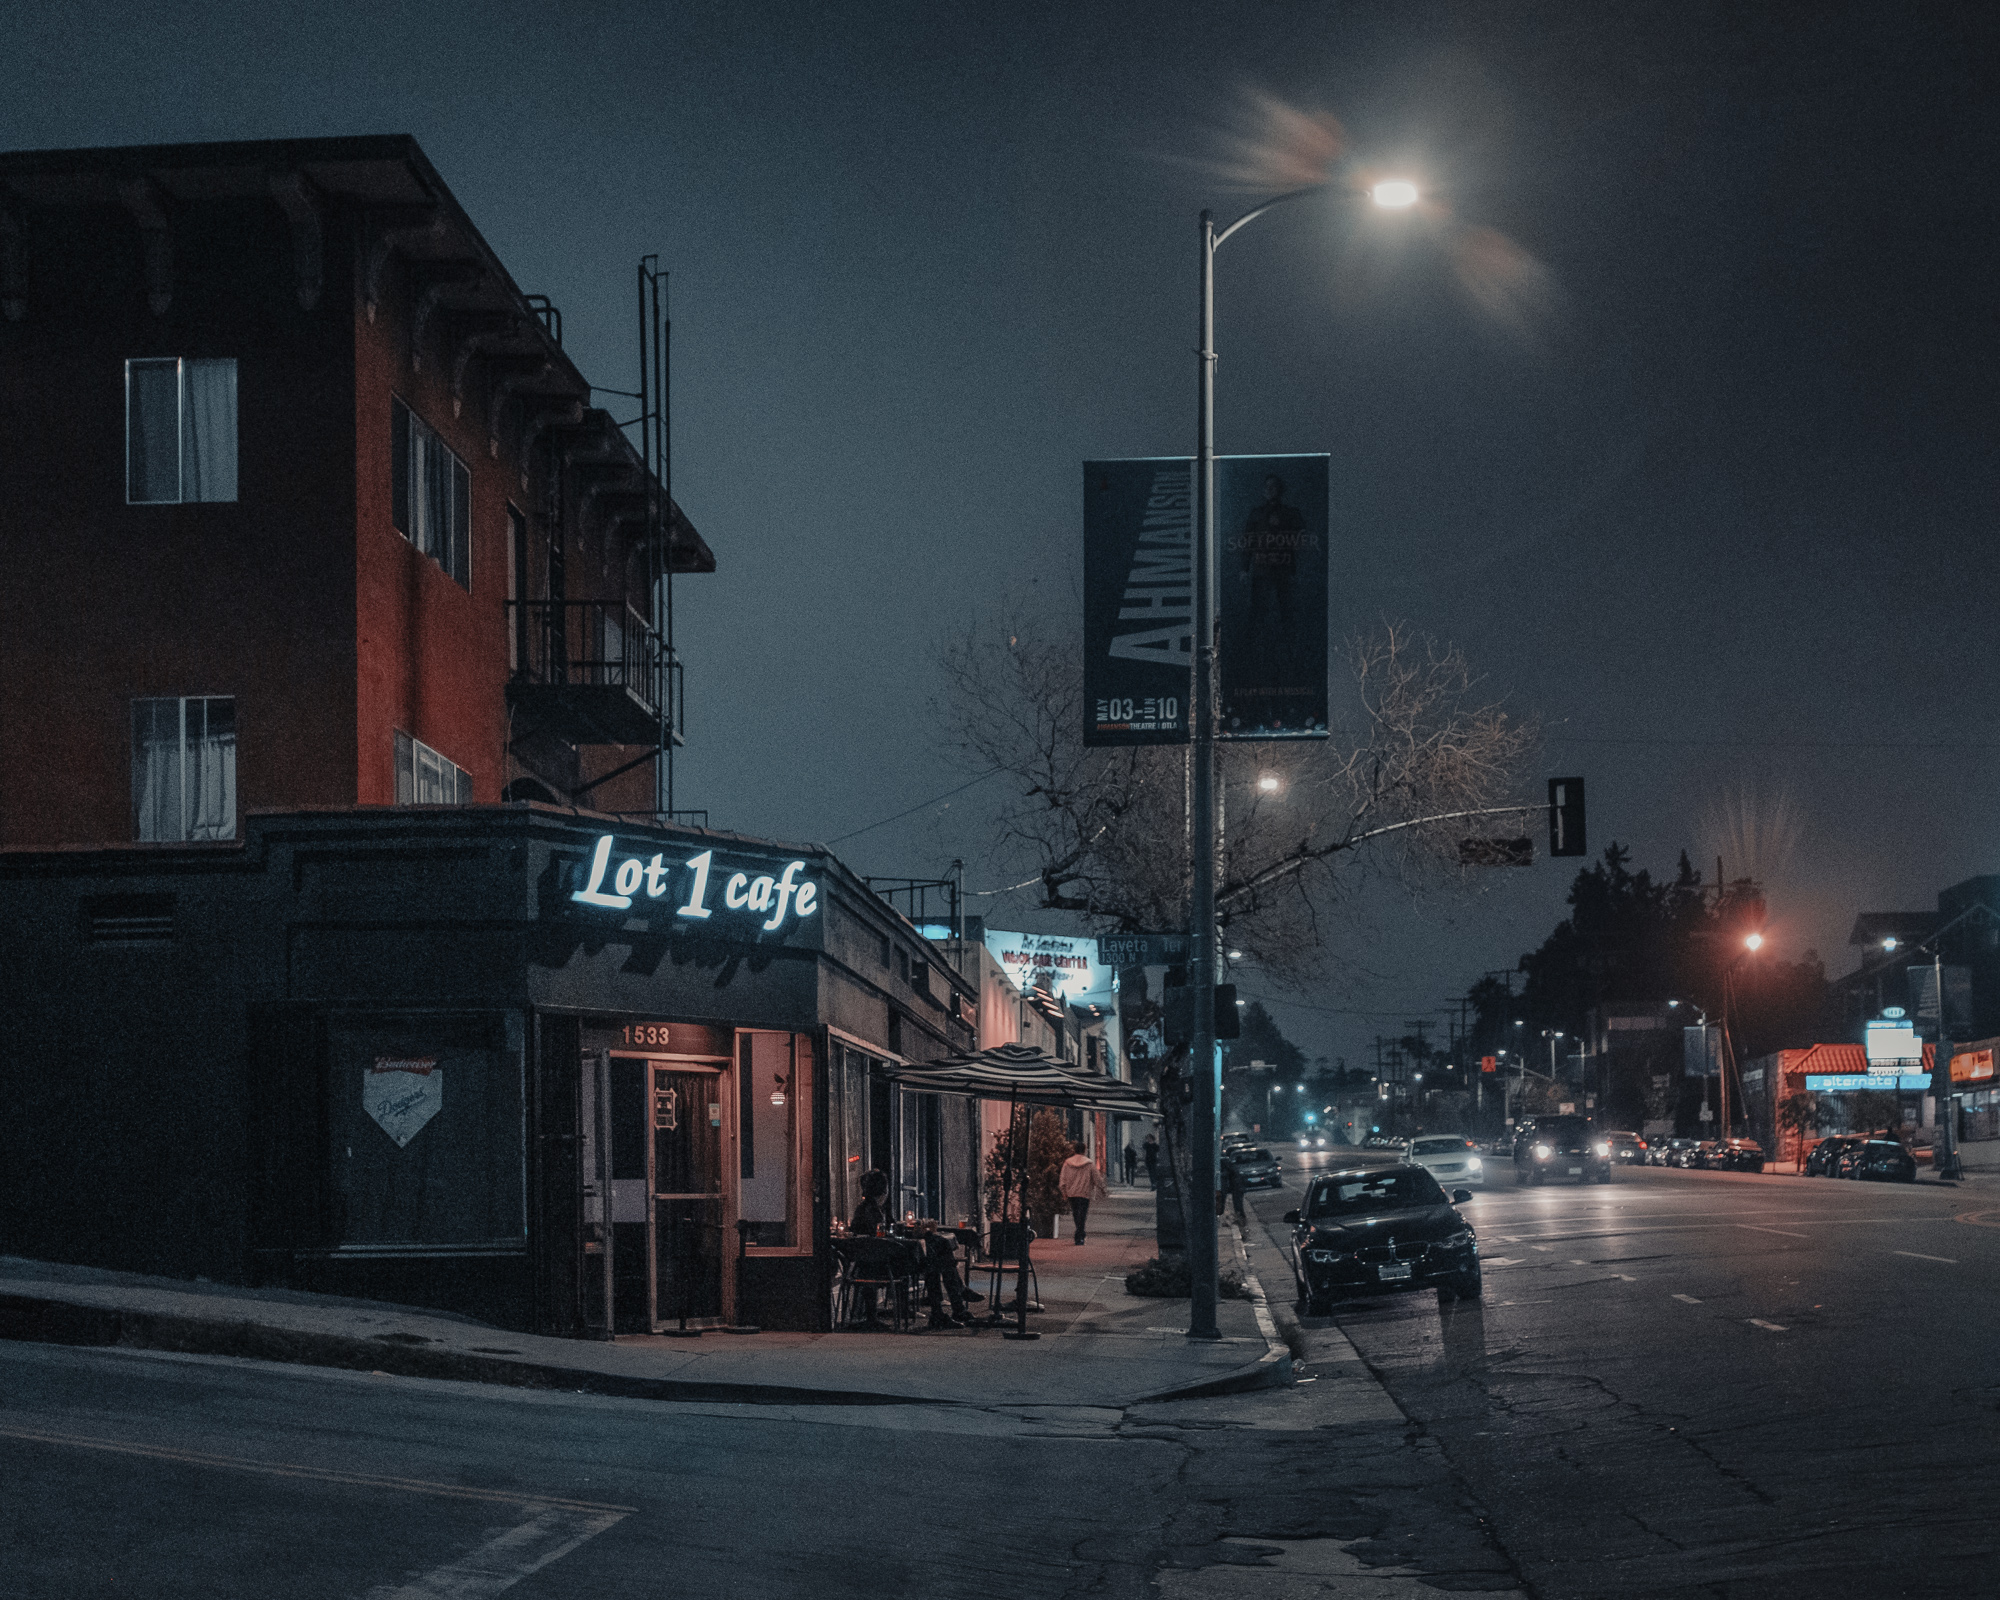 Lot 1 Cafe, Los Angeles, 2018